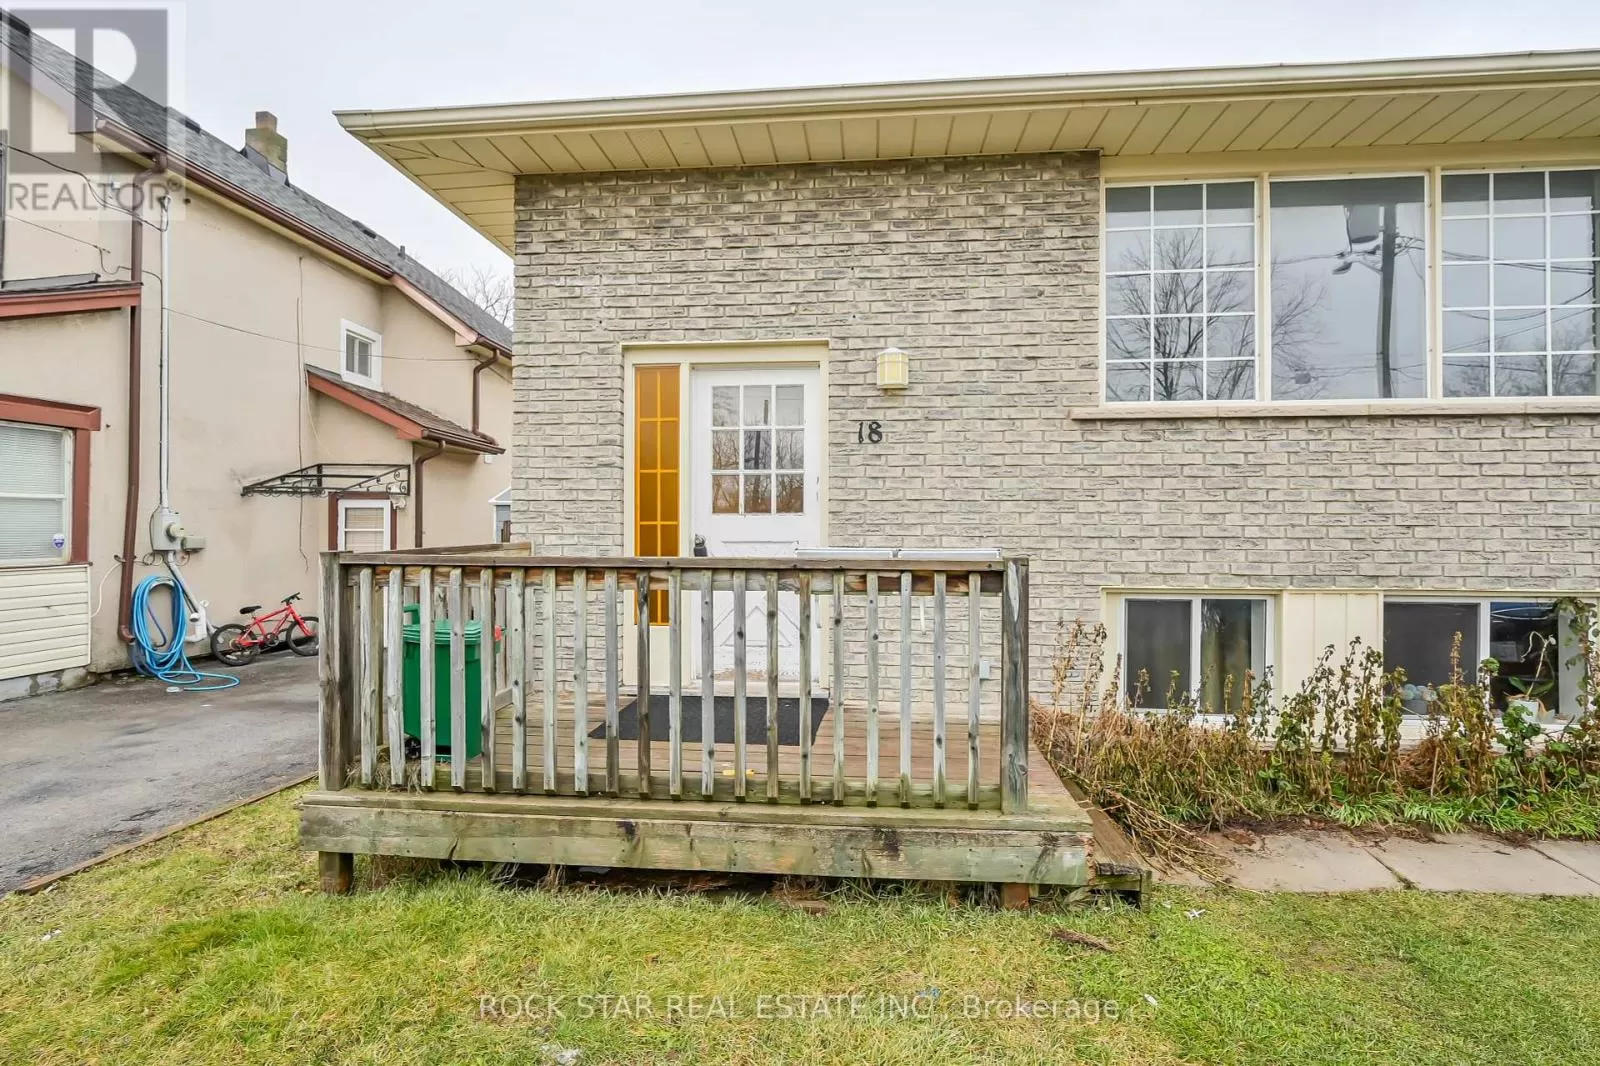 Duplex for rent: 18 Antwerp St, St. Catharines, Ontario L2S 1J8